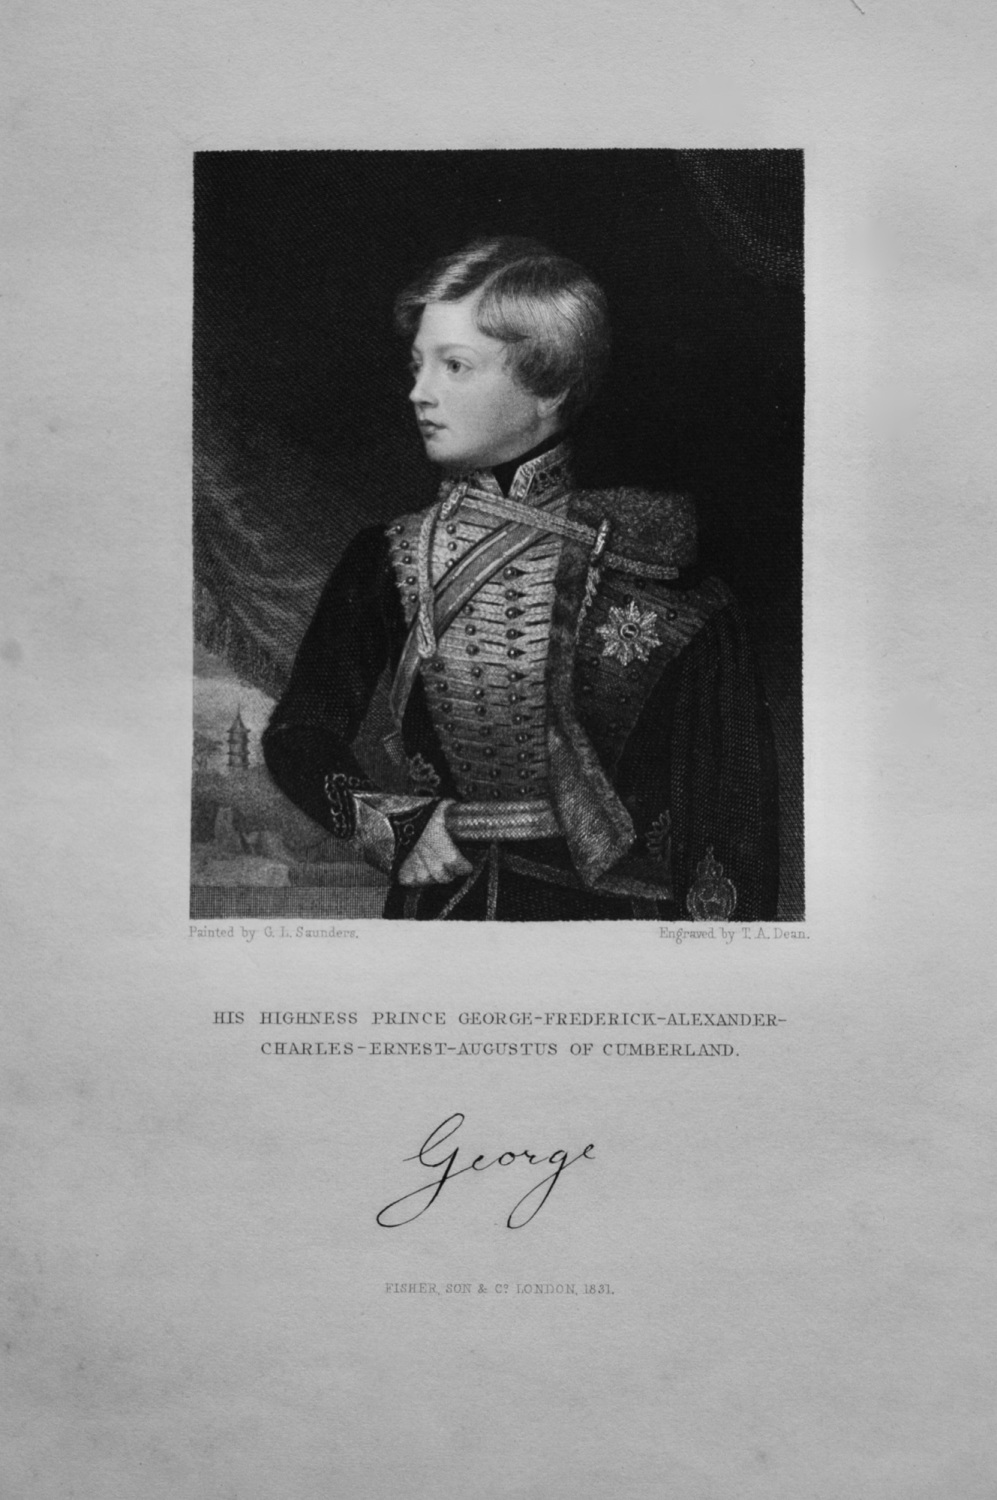 His Highness Prince George-Frederick-Alexander-Charles-Ernest-Augustus of C